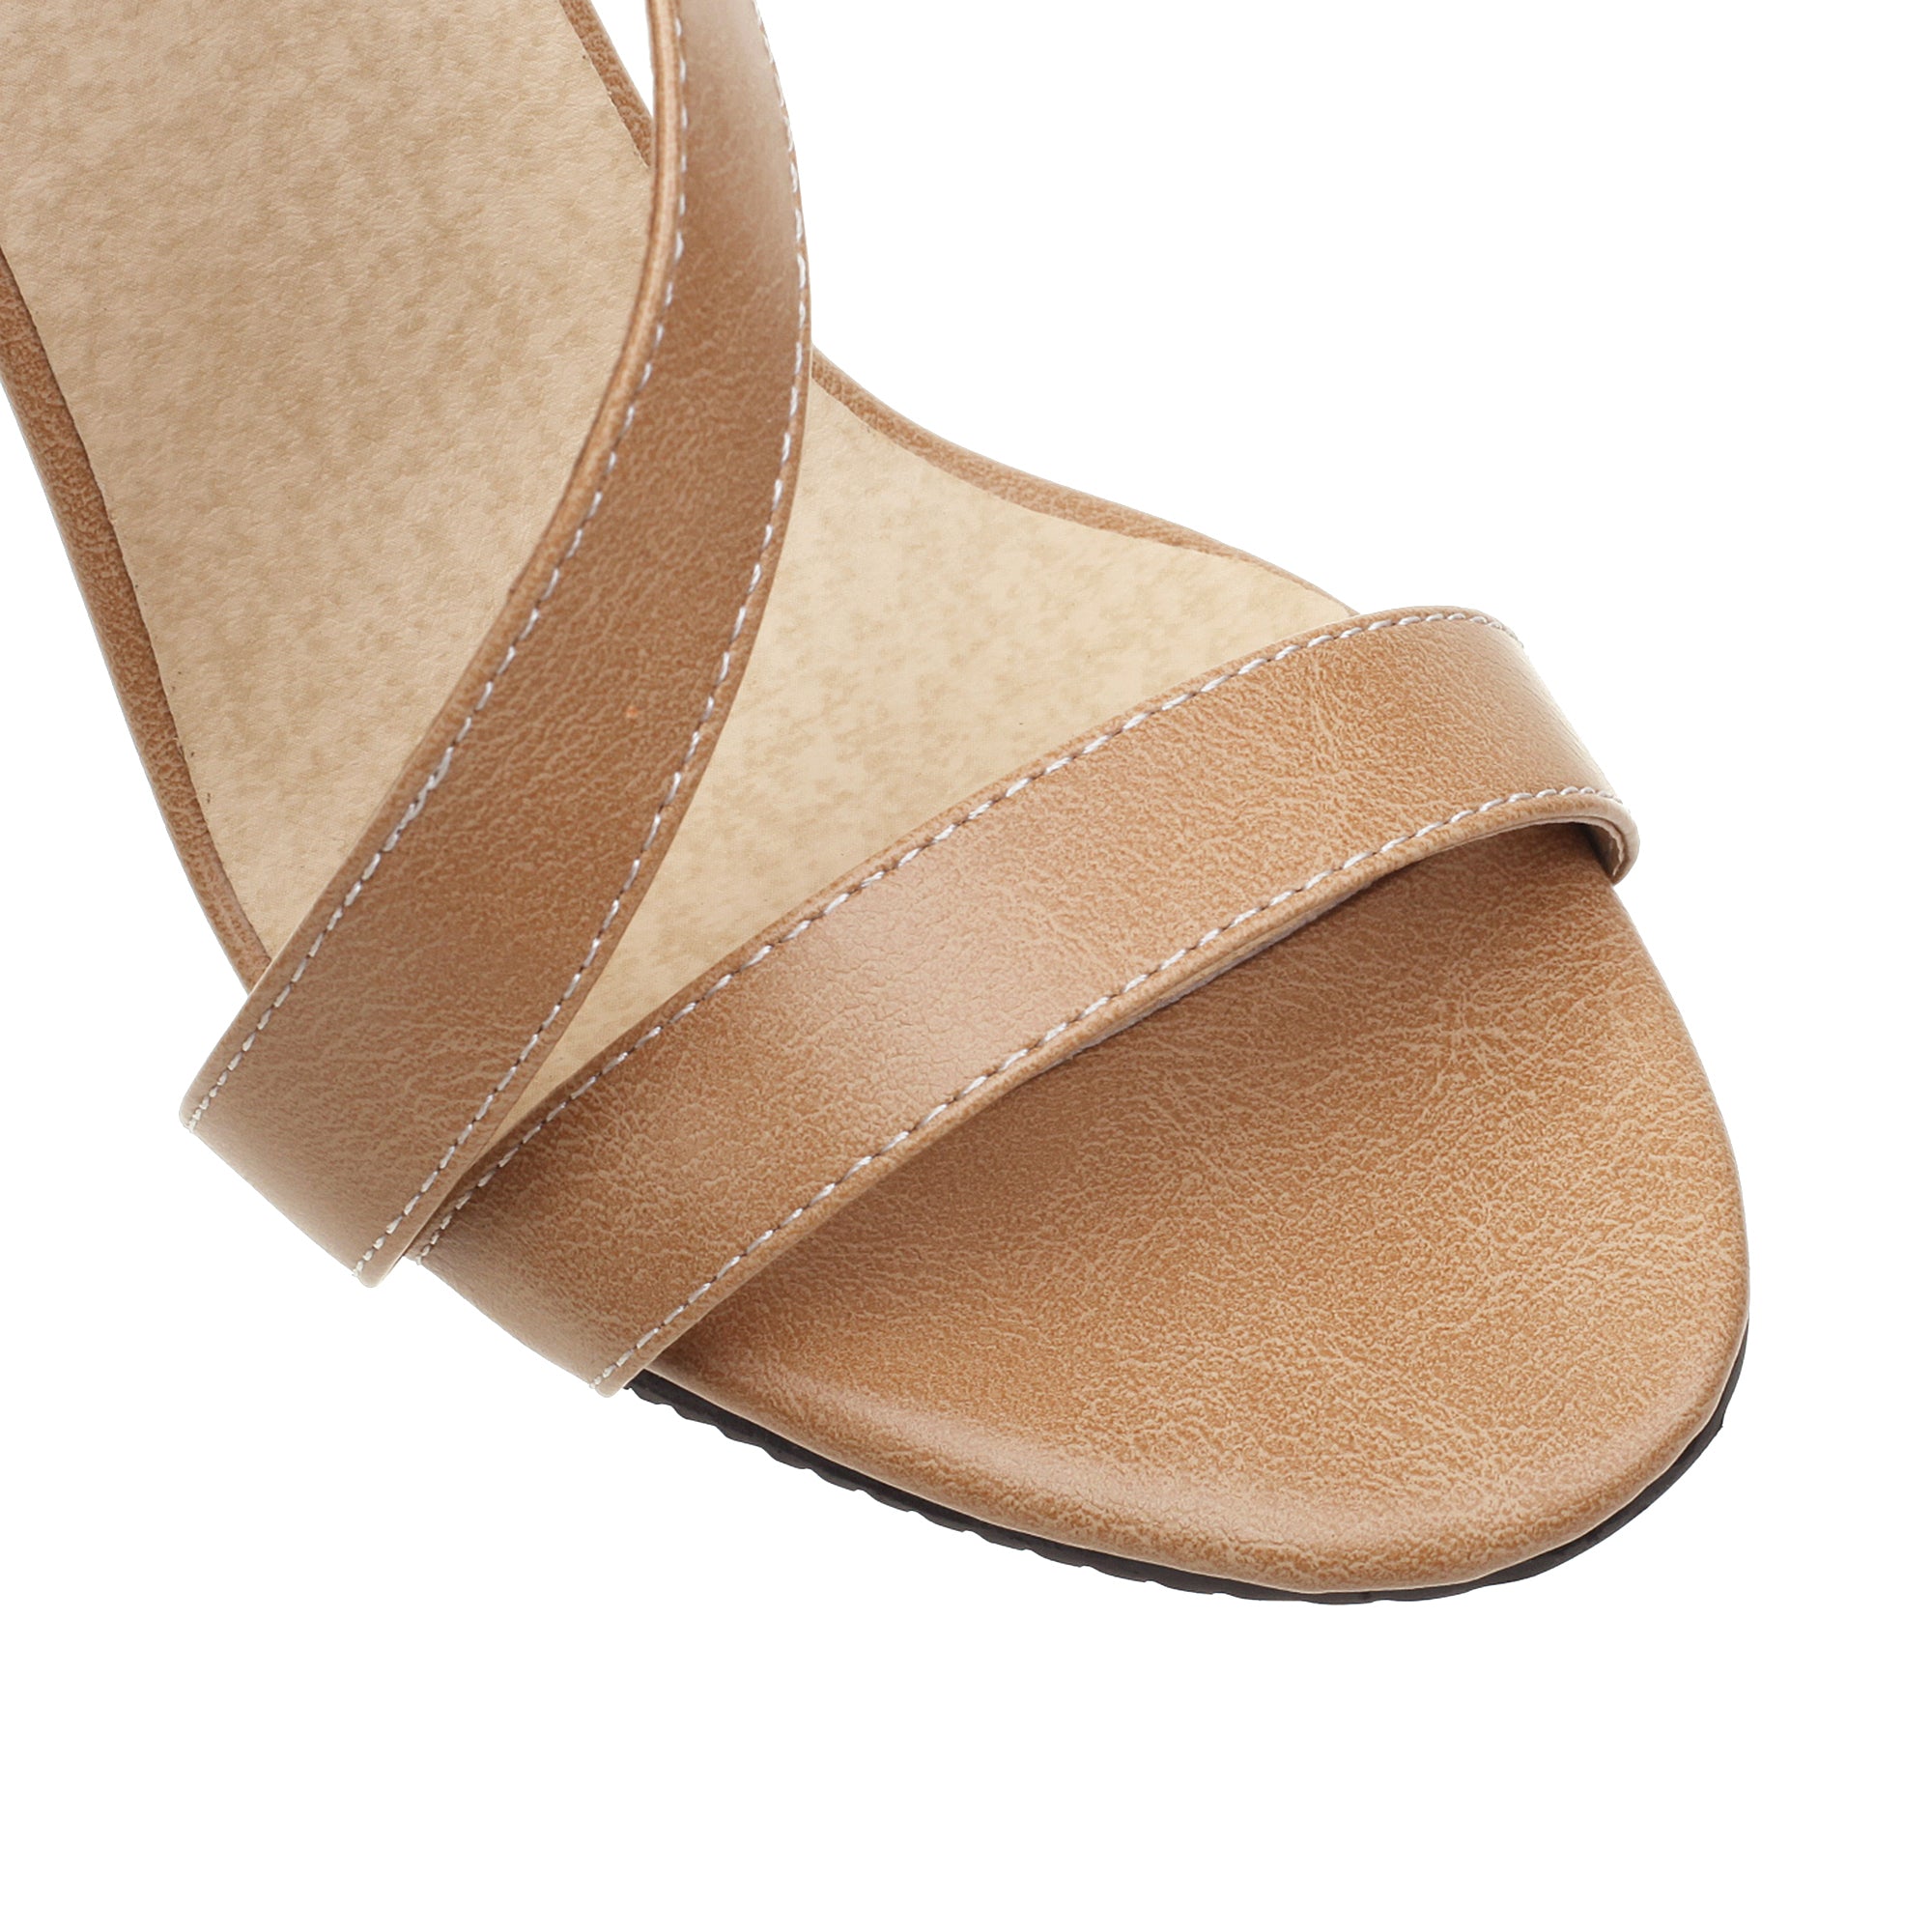 Bigsizeheels Stiletto Heel Round Toe Ankle Strap Sandals - Apricot best oversized womens heels are from bigsizeheels®